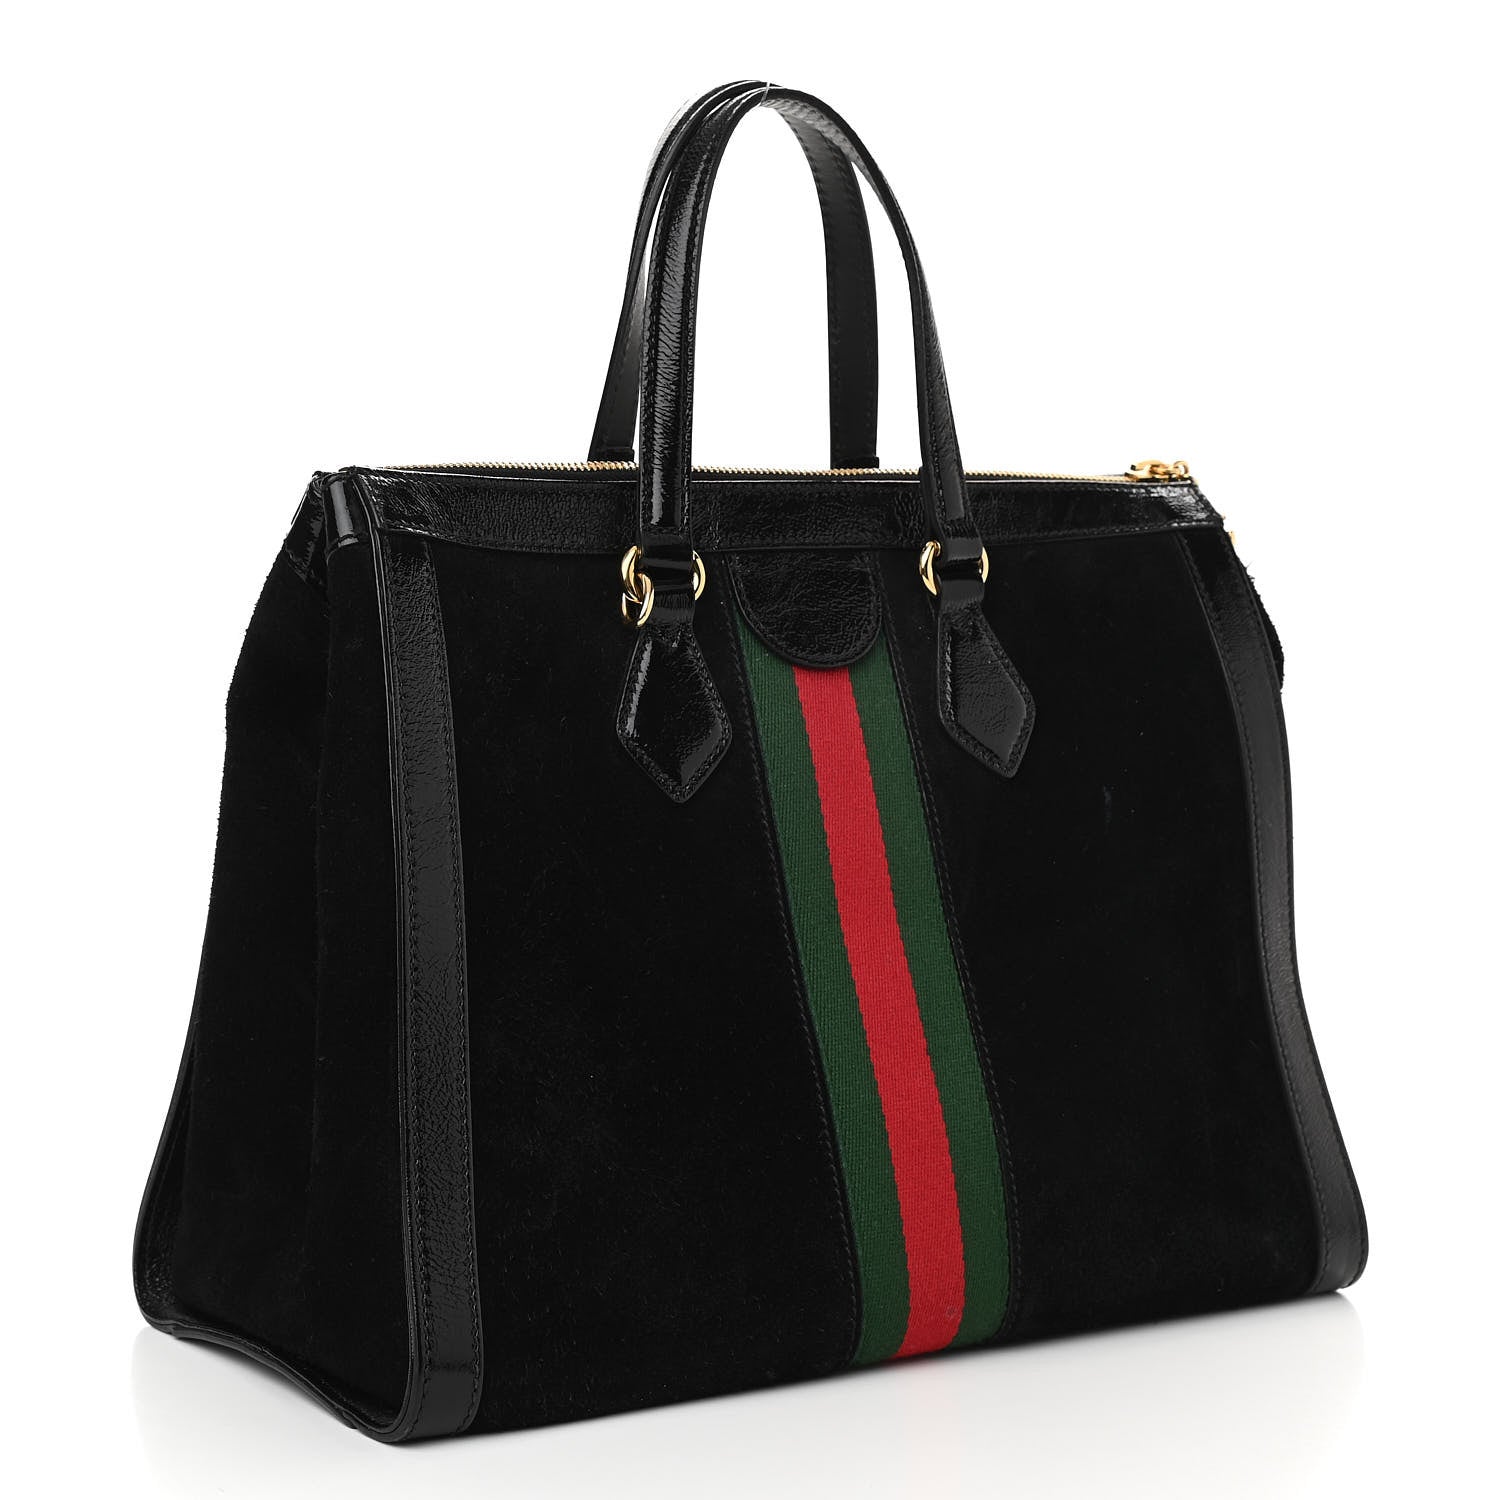 Gucci 100 Ophidia Medium Tote Bag –